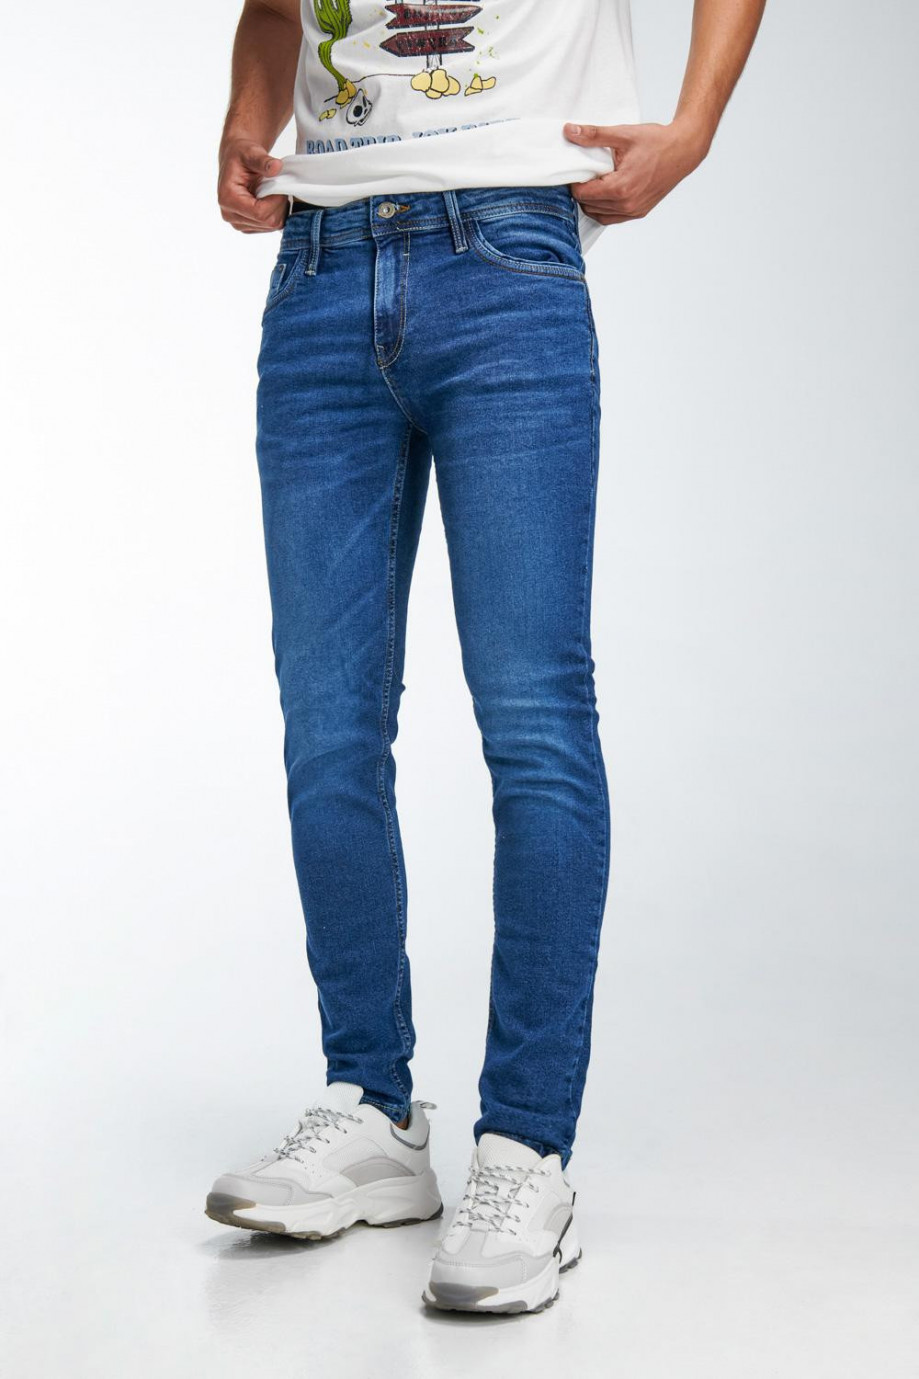 Jean azul oscuro tiro bajo skinny con costuras en contraste